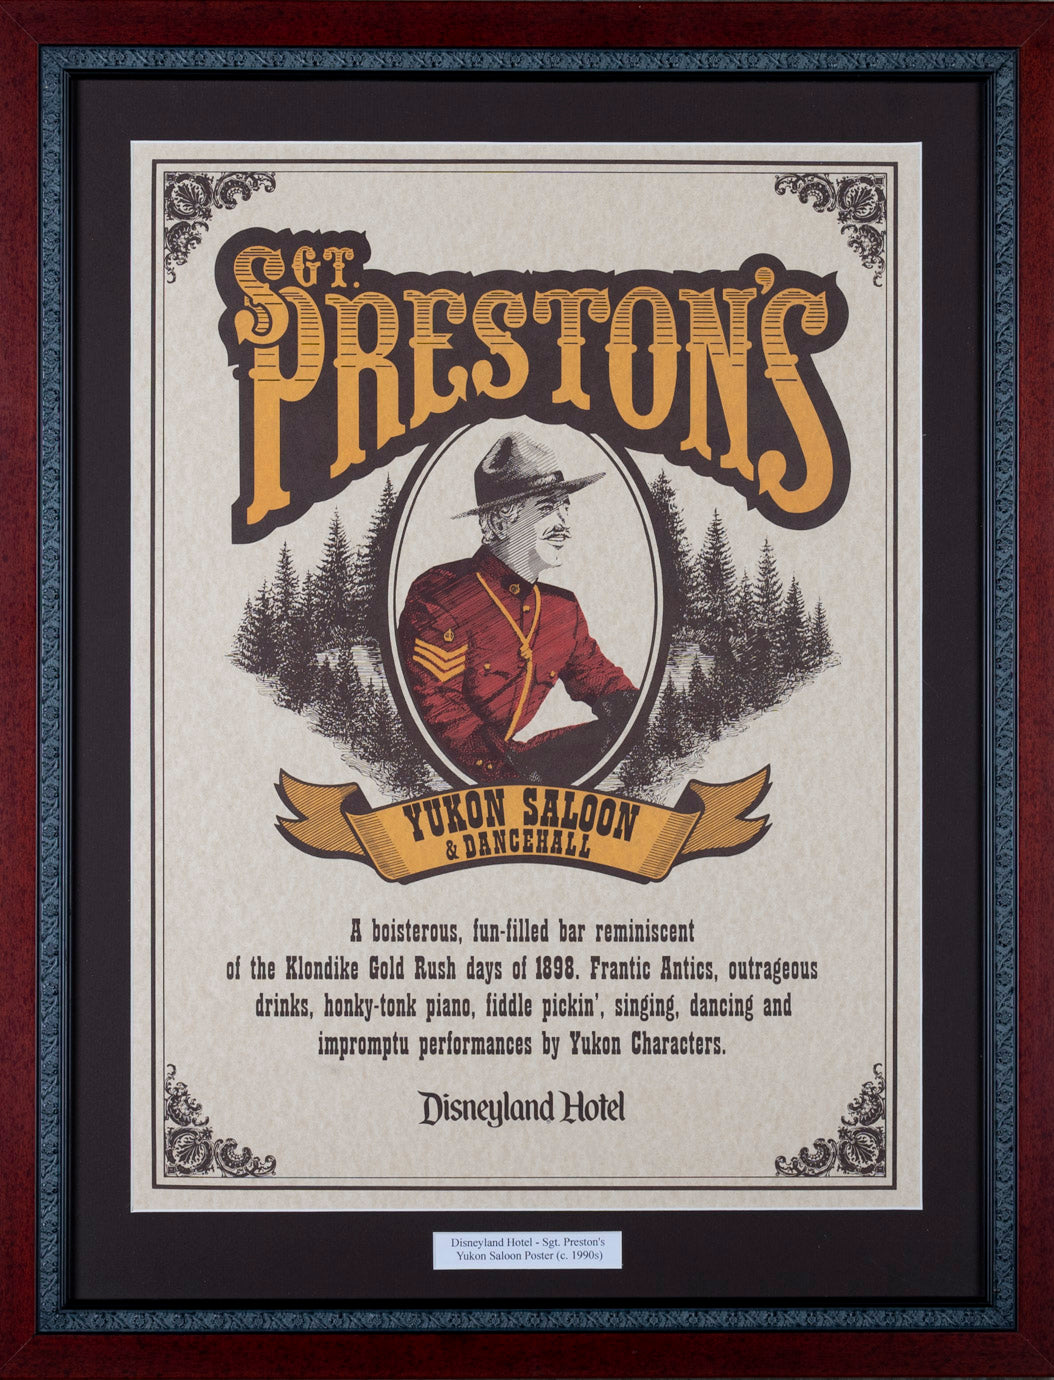 Disneyland Hotel - Sgt. Preston's Yukon Saloon Poster